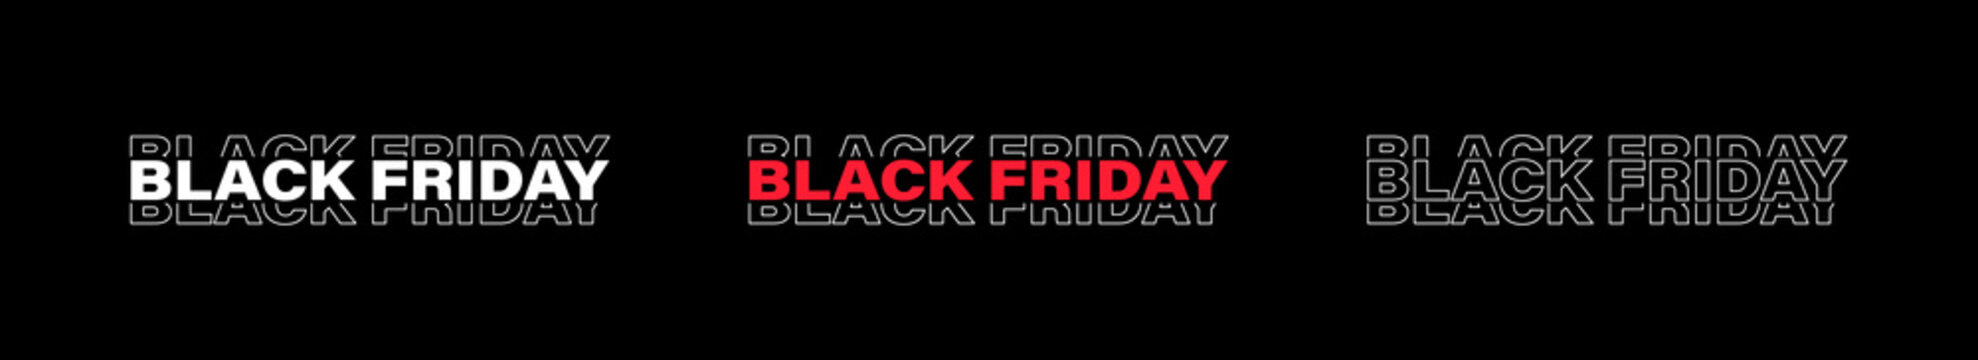 Black Friday typography banner. Vector illustration. Black Friday Sale Horizontal banner.